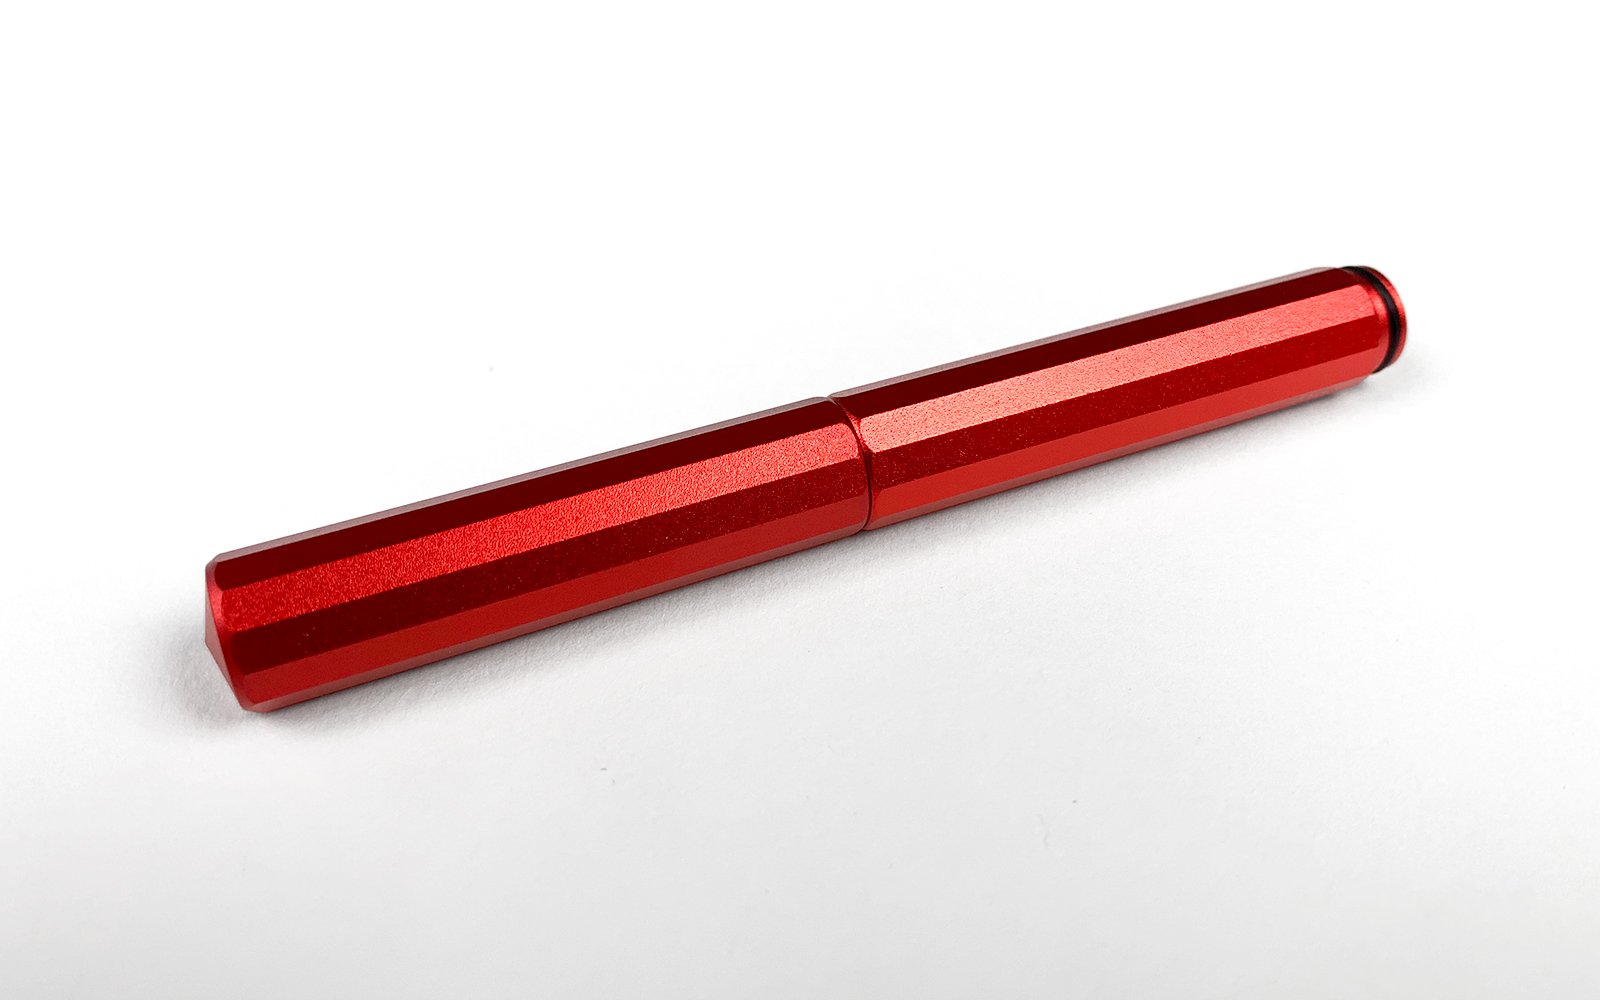 ēnsso XS Minimalist Pocket Fountain Pen - Red Aluminum